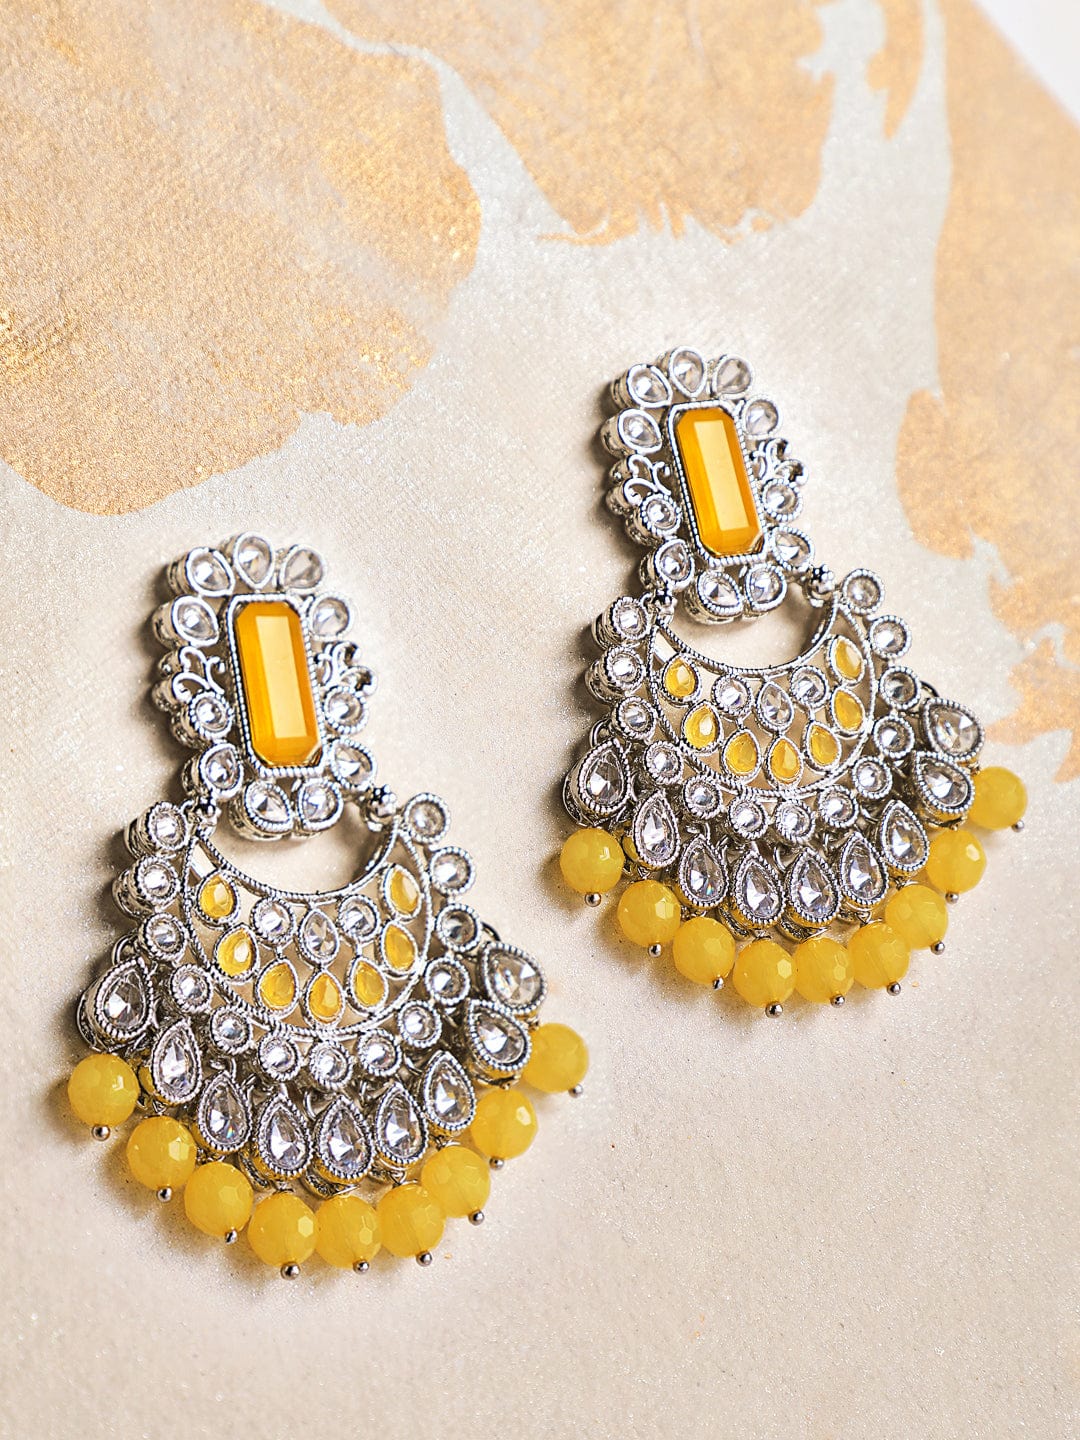 Rubans AD Studded Silver Plated Yellow Beaded Chandbali Earrings Earrings